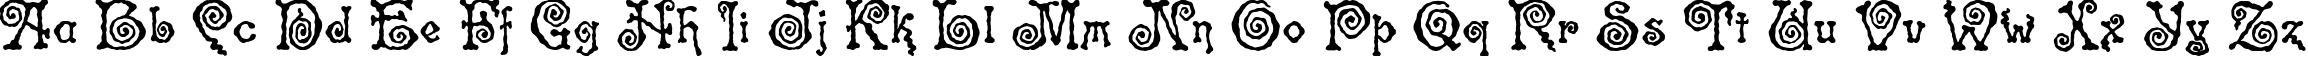 Пример написания английского алфавита шрифтом Spinstee